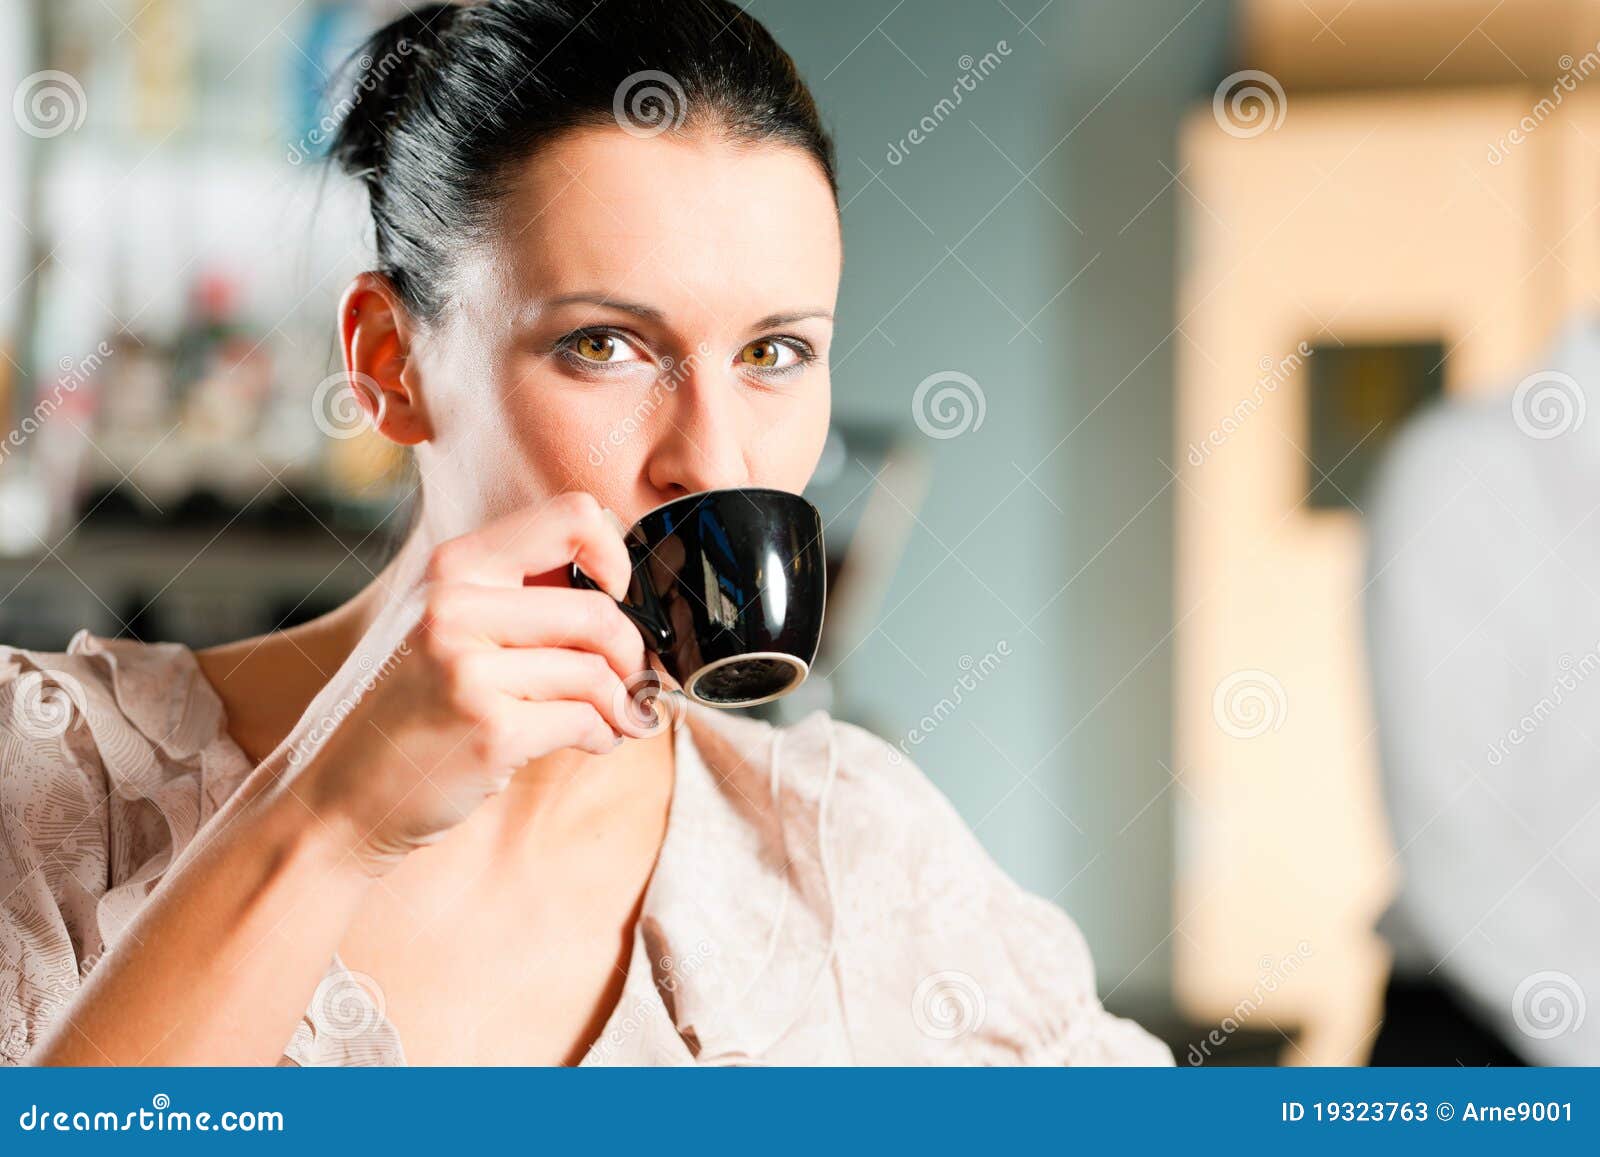 woman in a coffeeshop